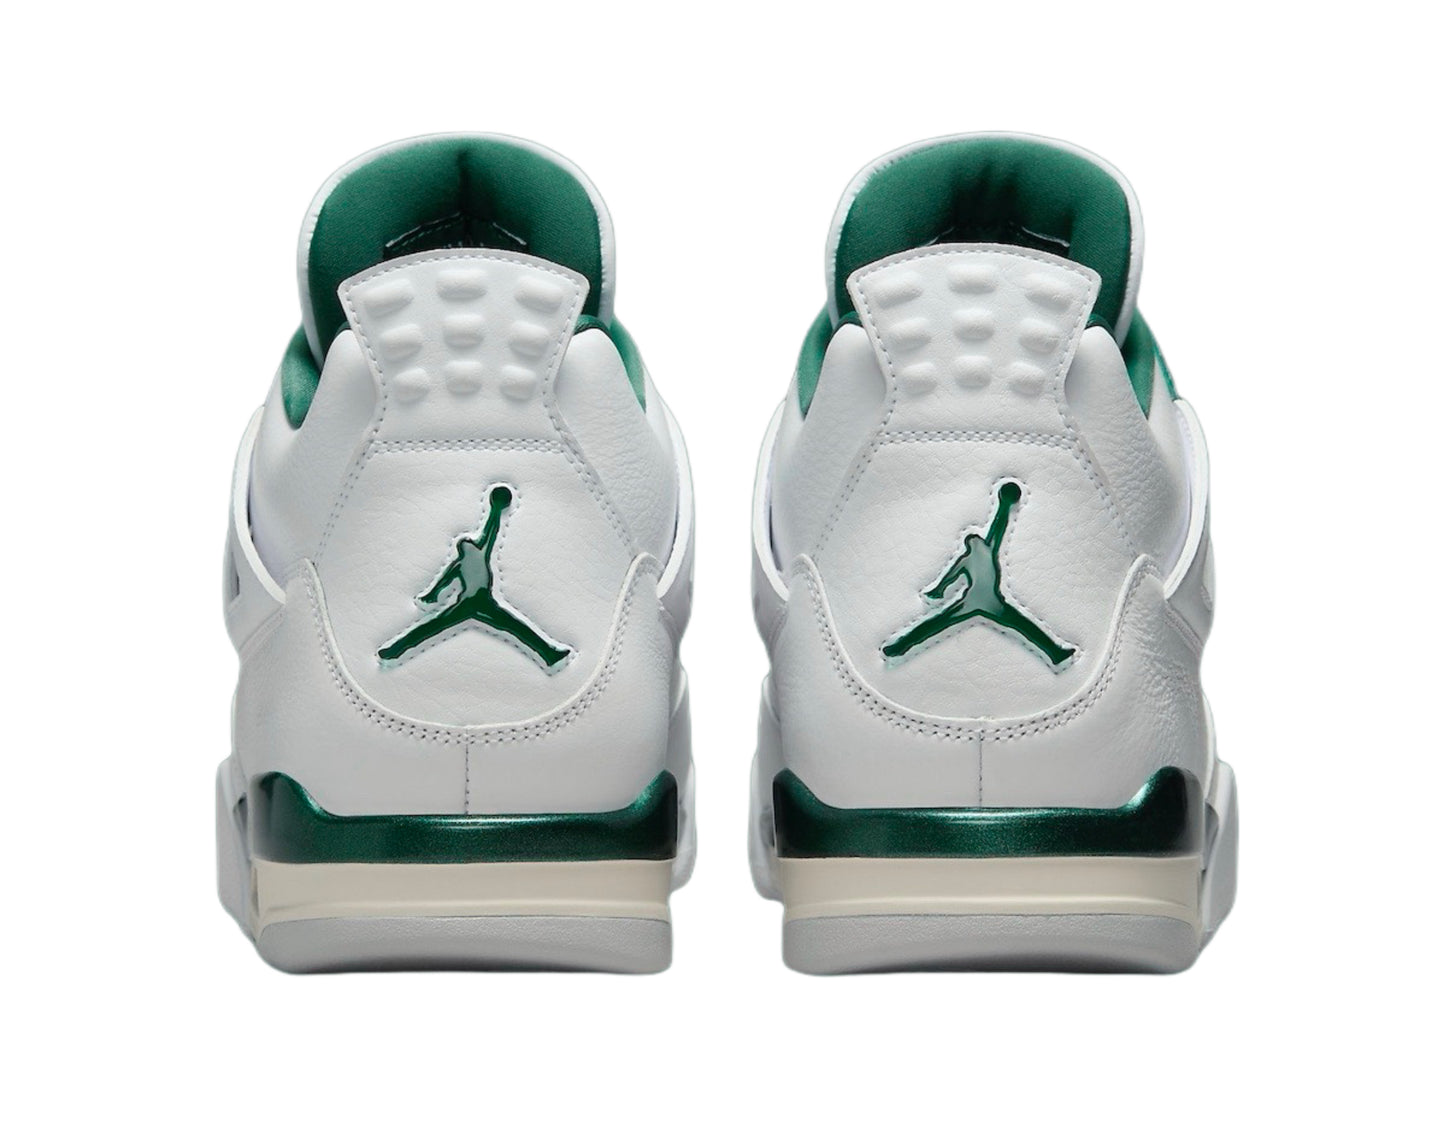 Air Jordan 4 “Oxidised Green”